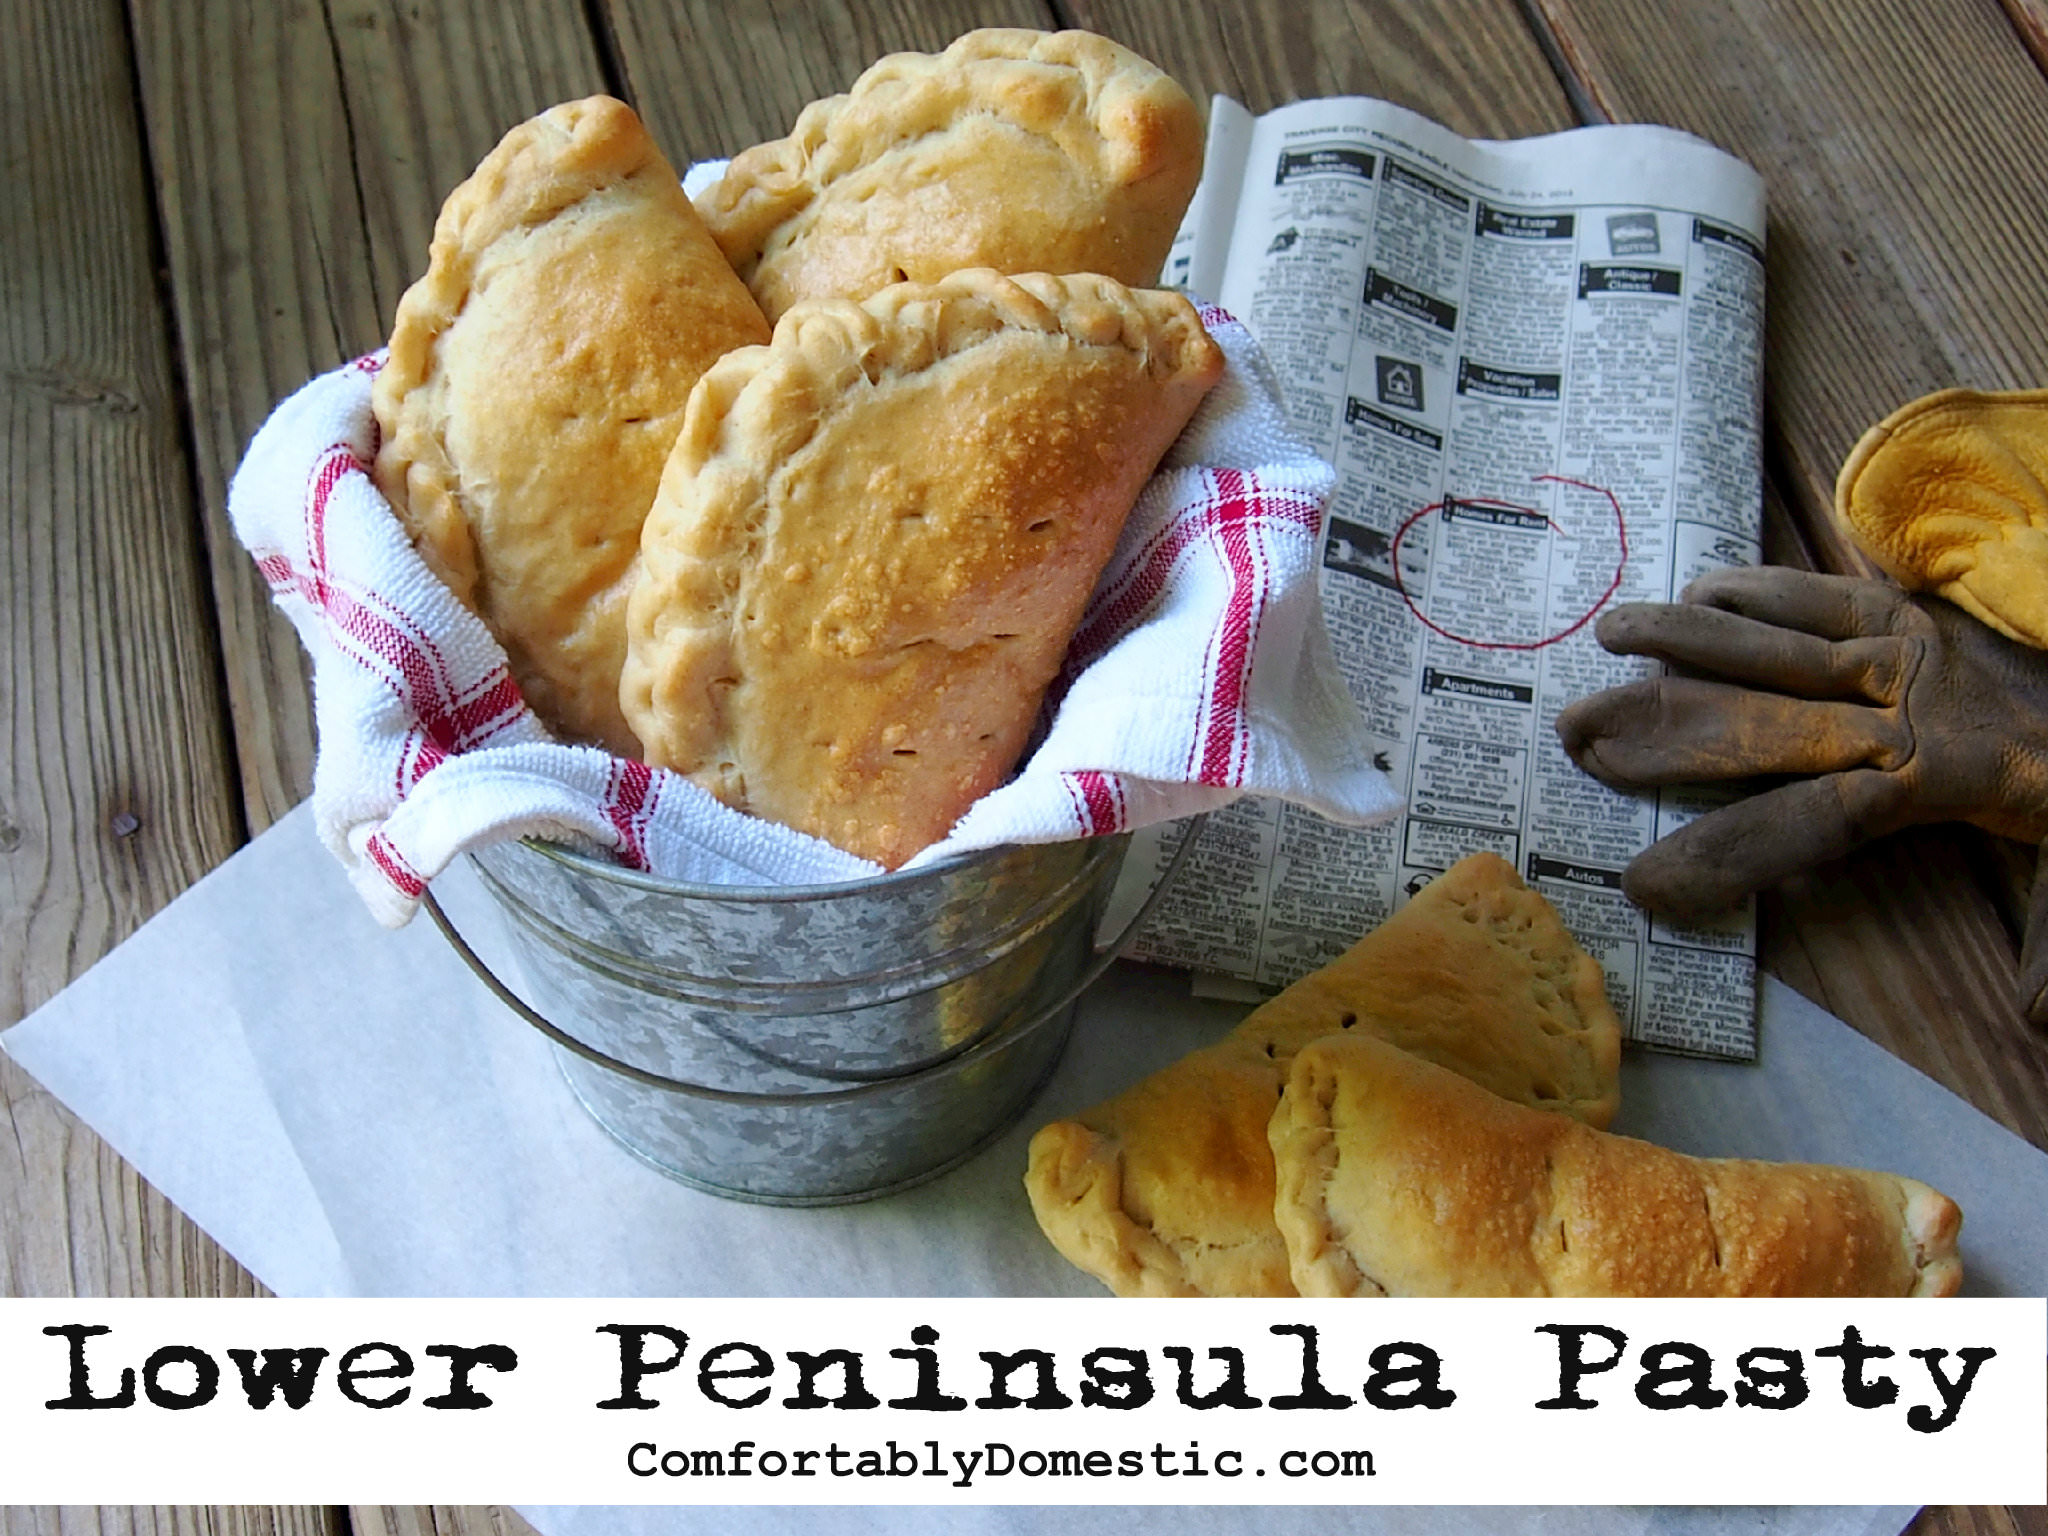 Lower Peninsula Pasty || ComfortablyDomestic.com